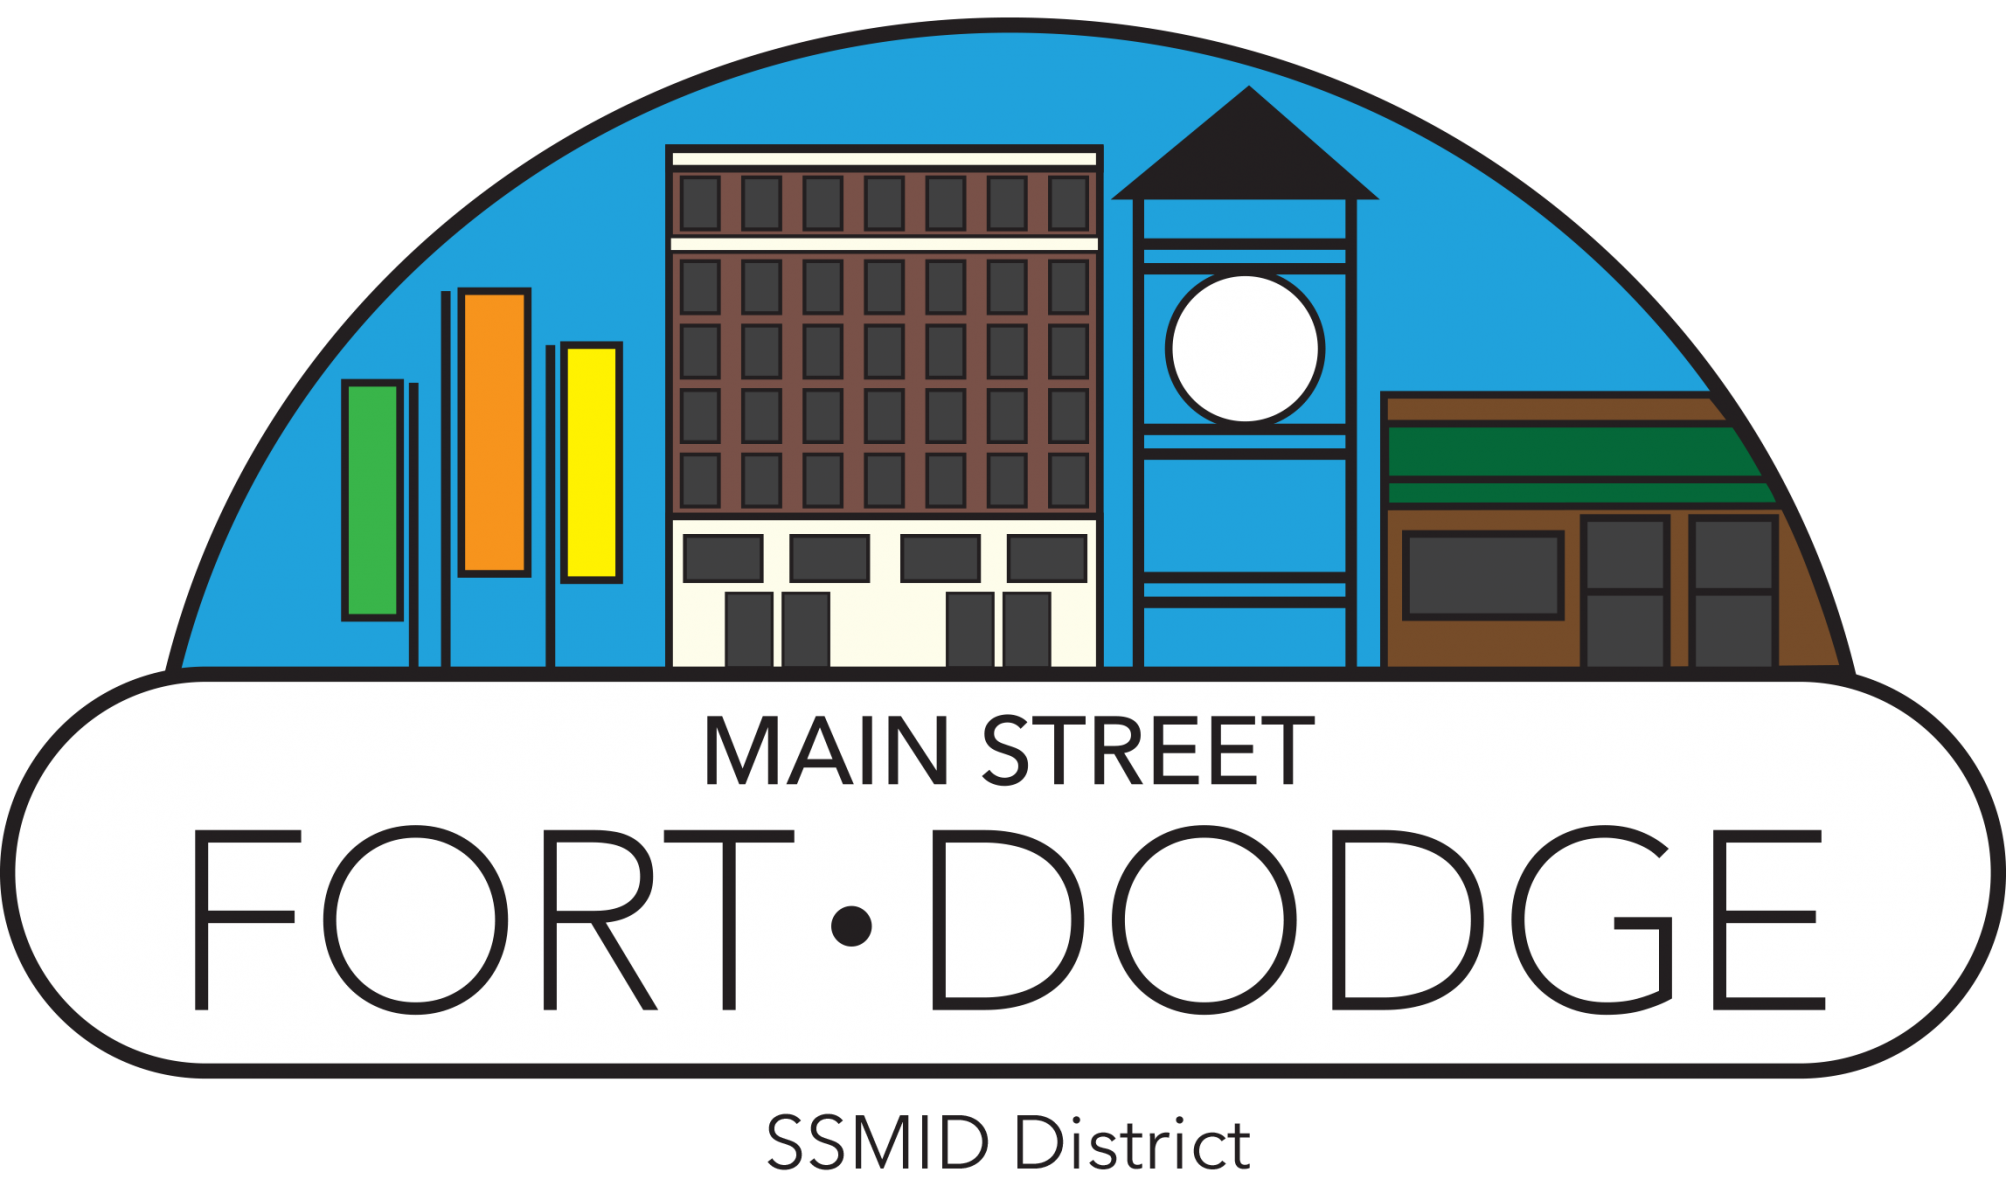 Main Street Fort Dodge's Image